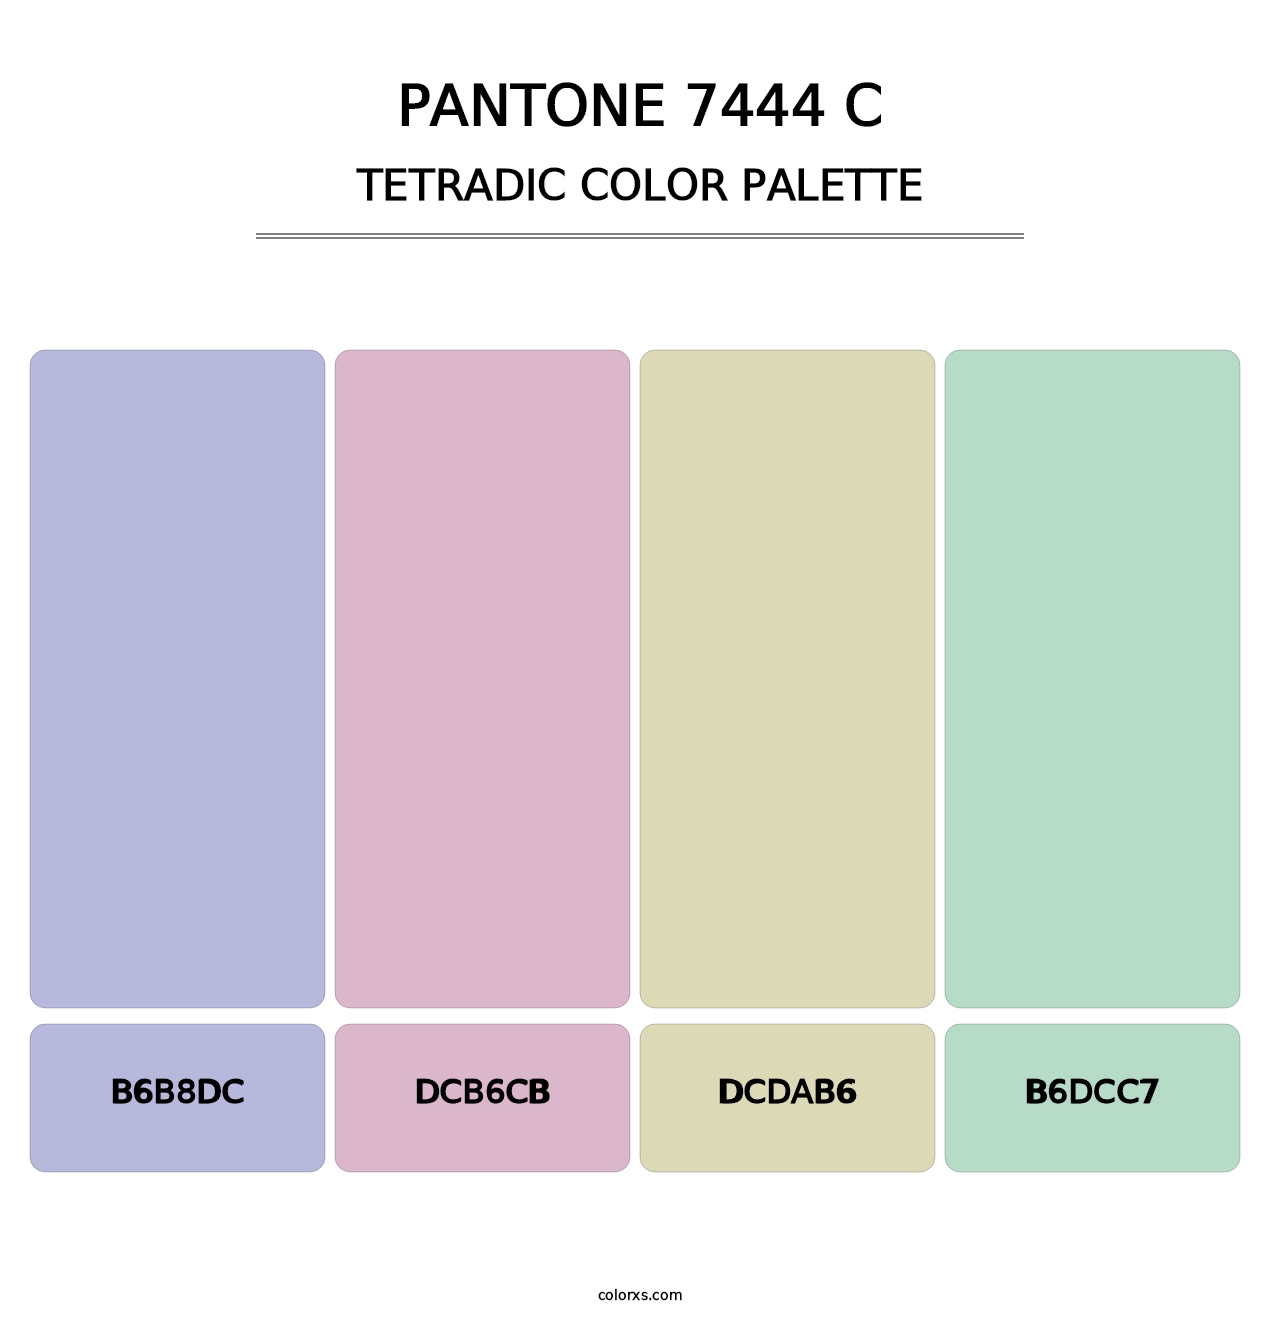 PANTONE 7444 C - Tetradic Color Palette